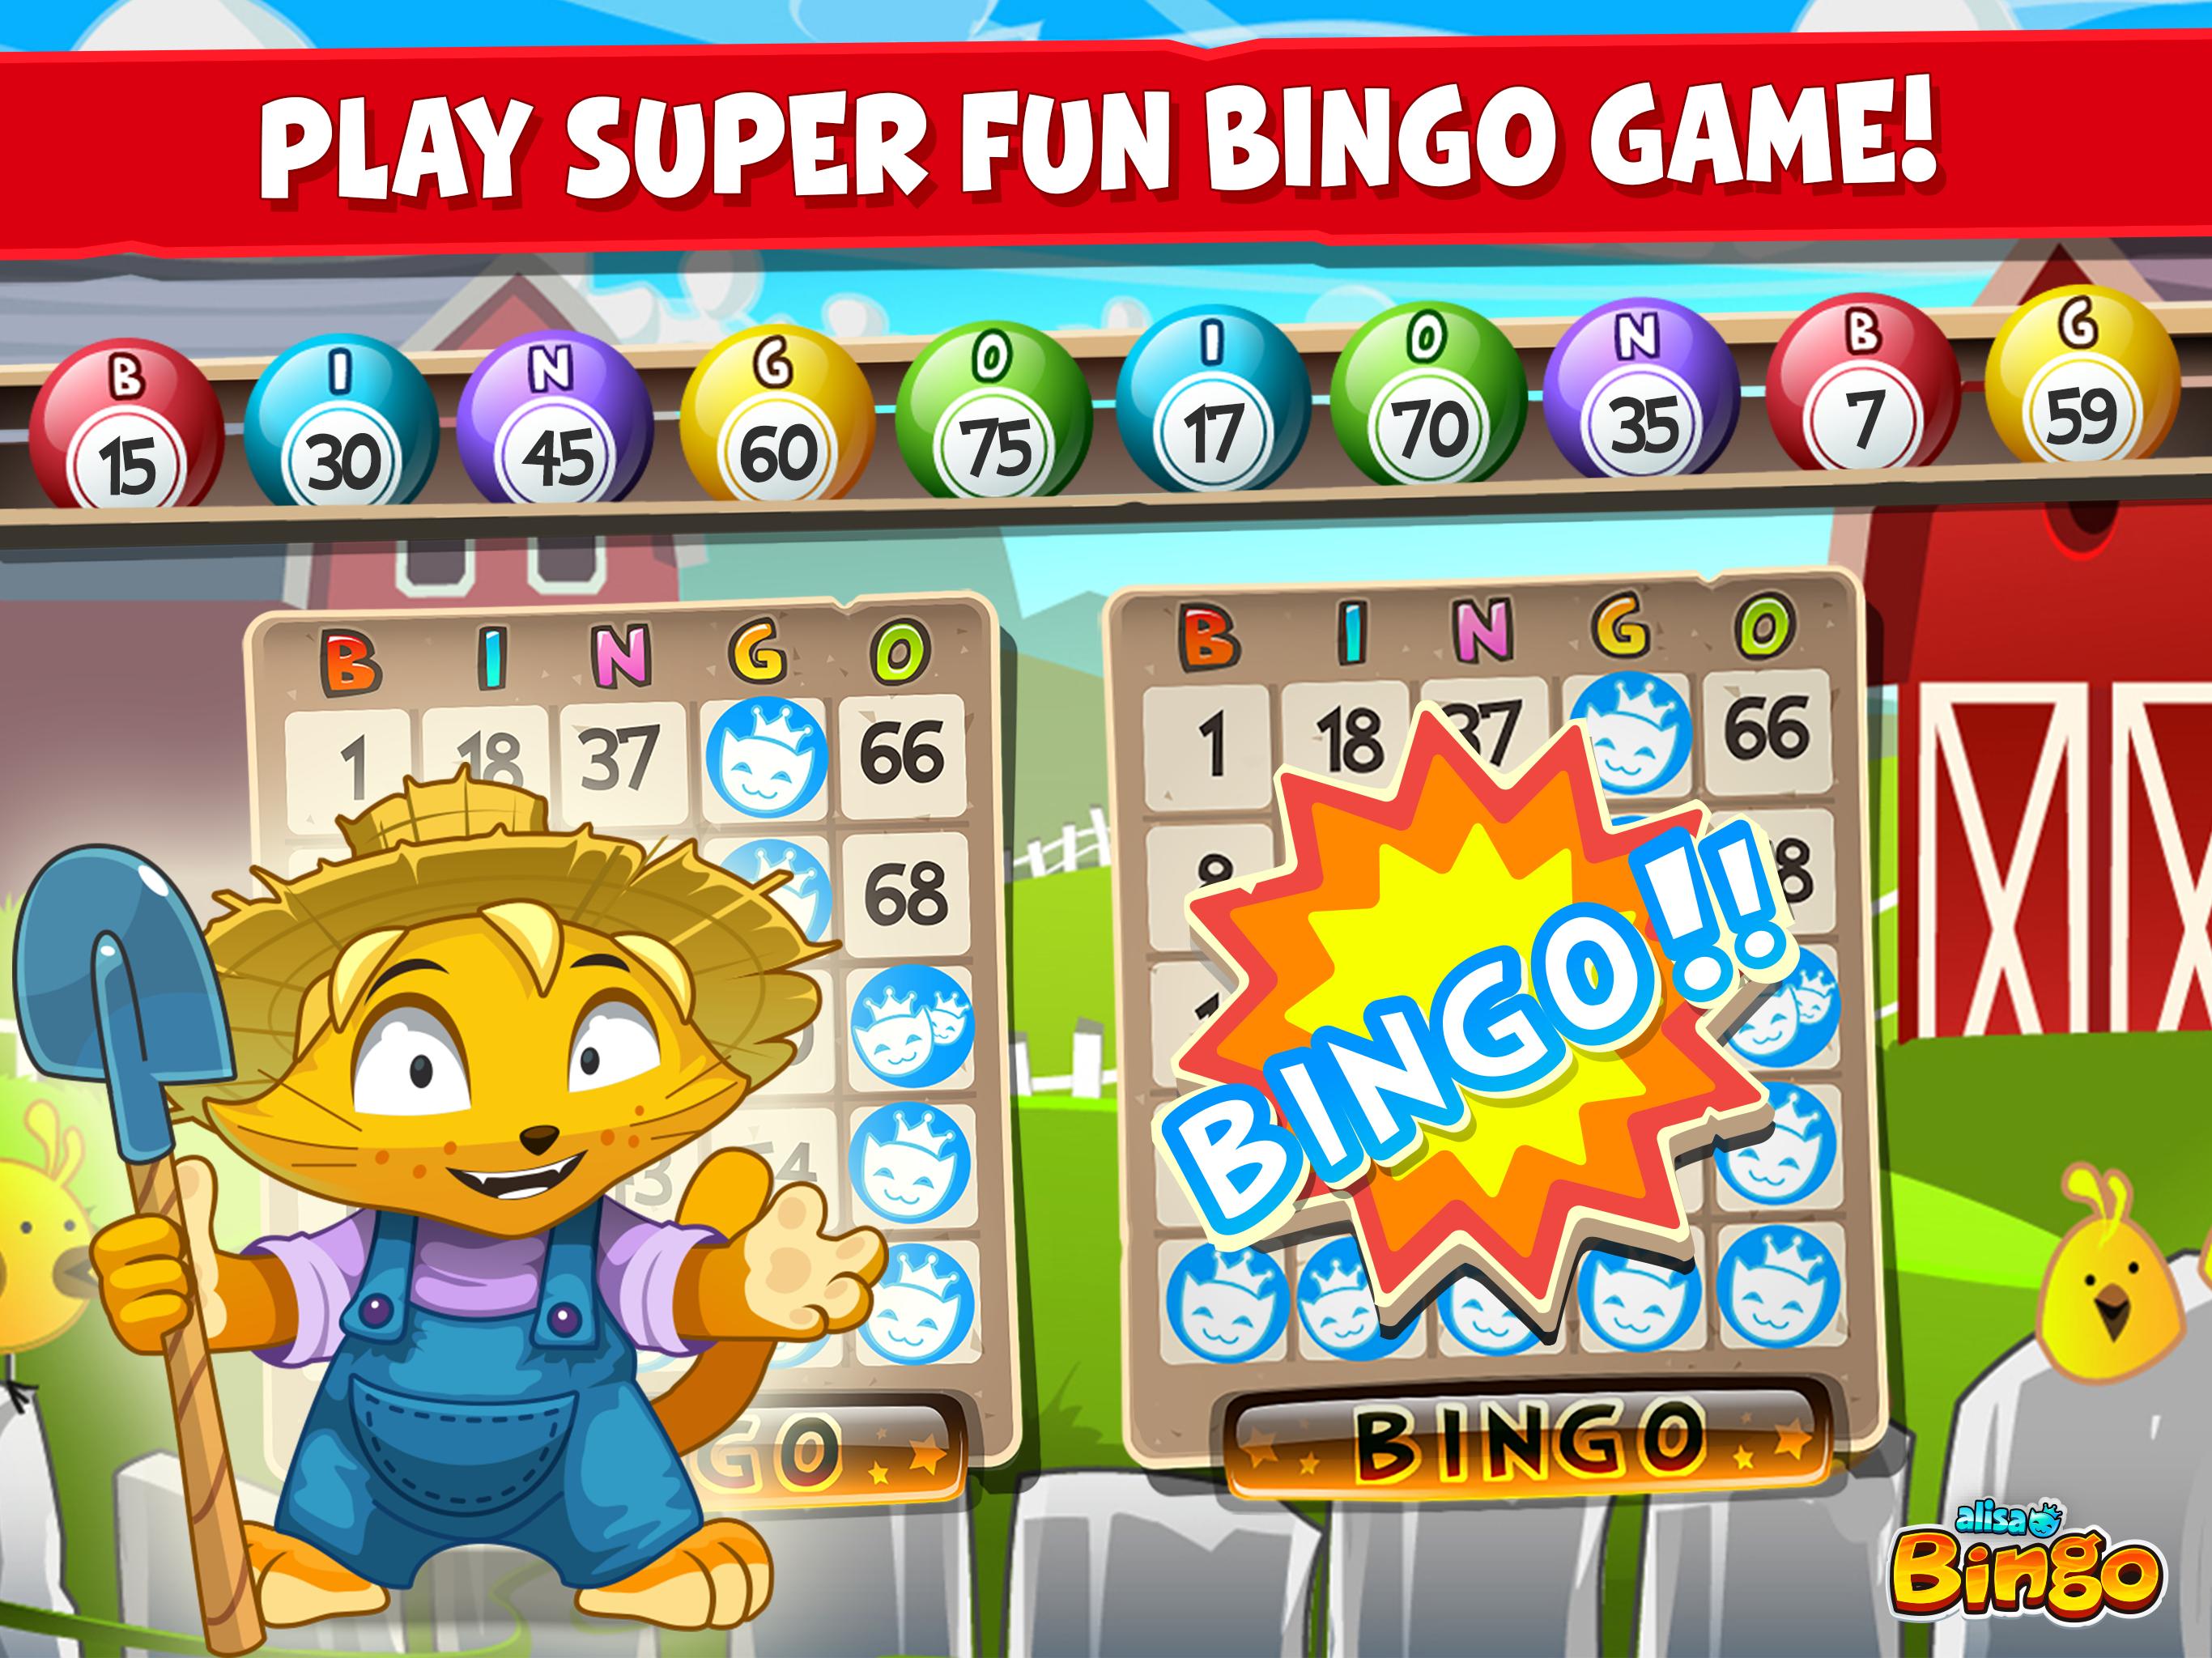 Bingo by Alisa - Free Live Multiplayer Bingo Games 1.25.20 Screenshot 11